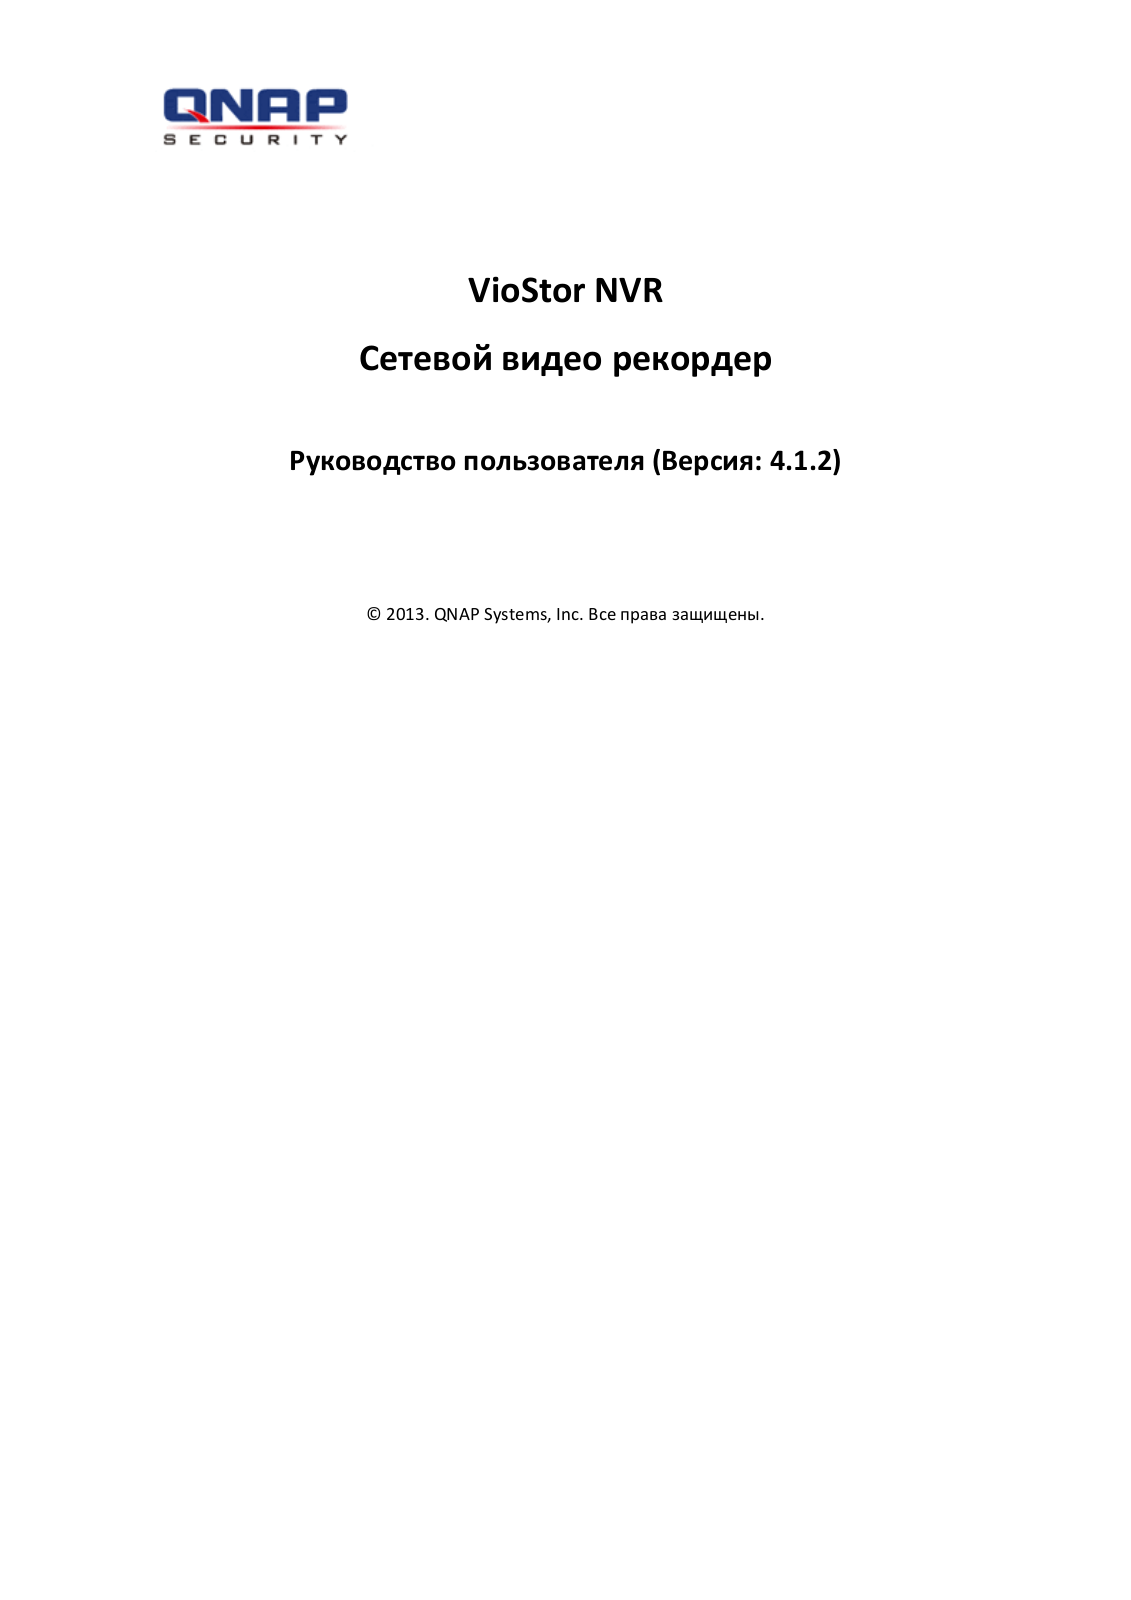 QNAP VioStor NVR User Manual